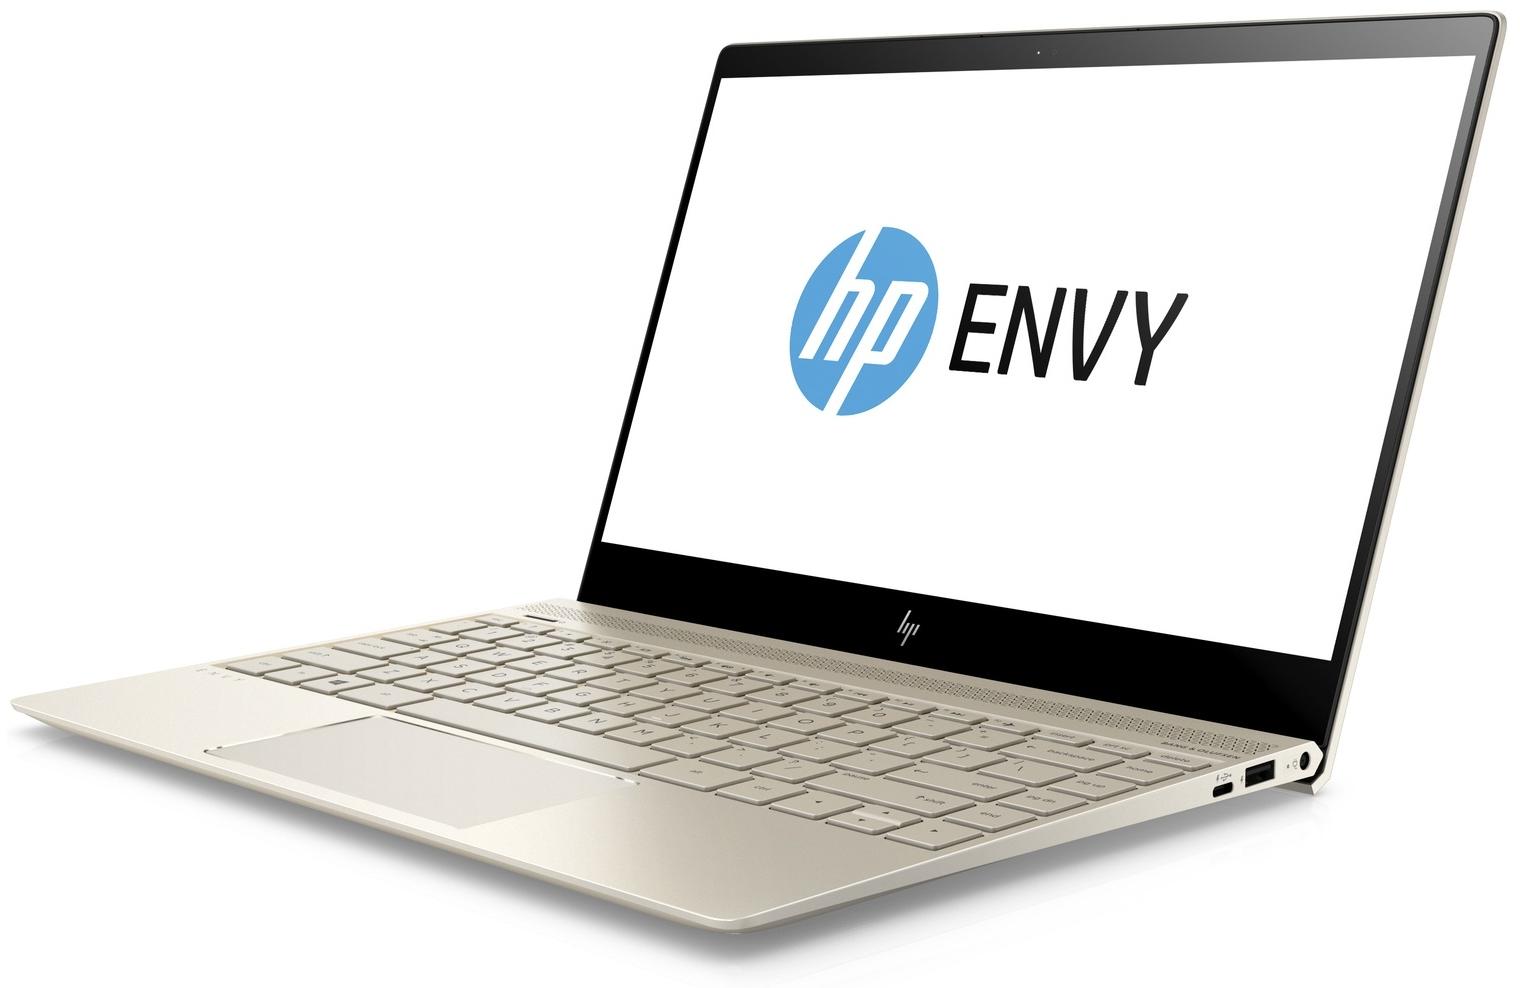   HP Envy 13-ah1012ur (5CV21EA)  1